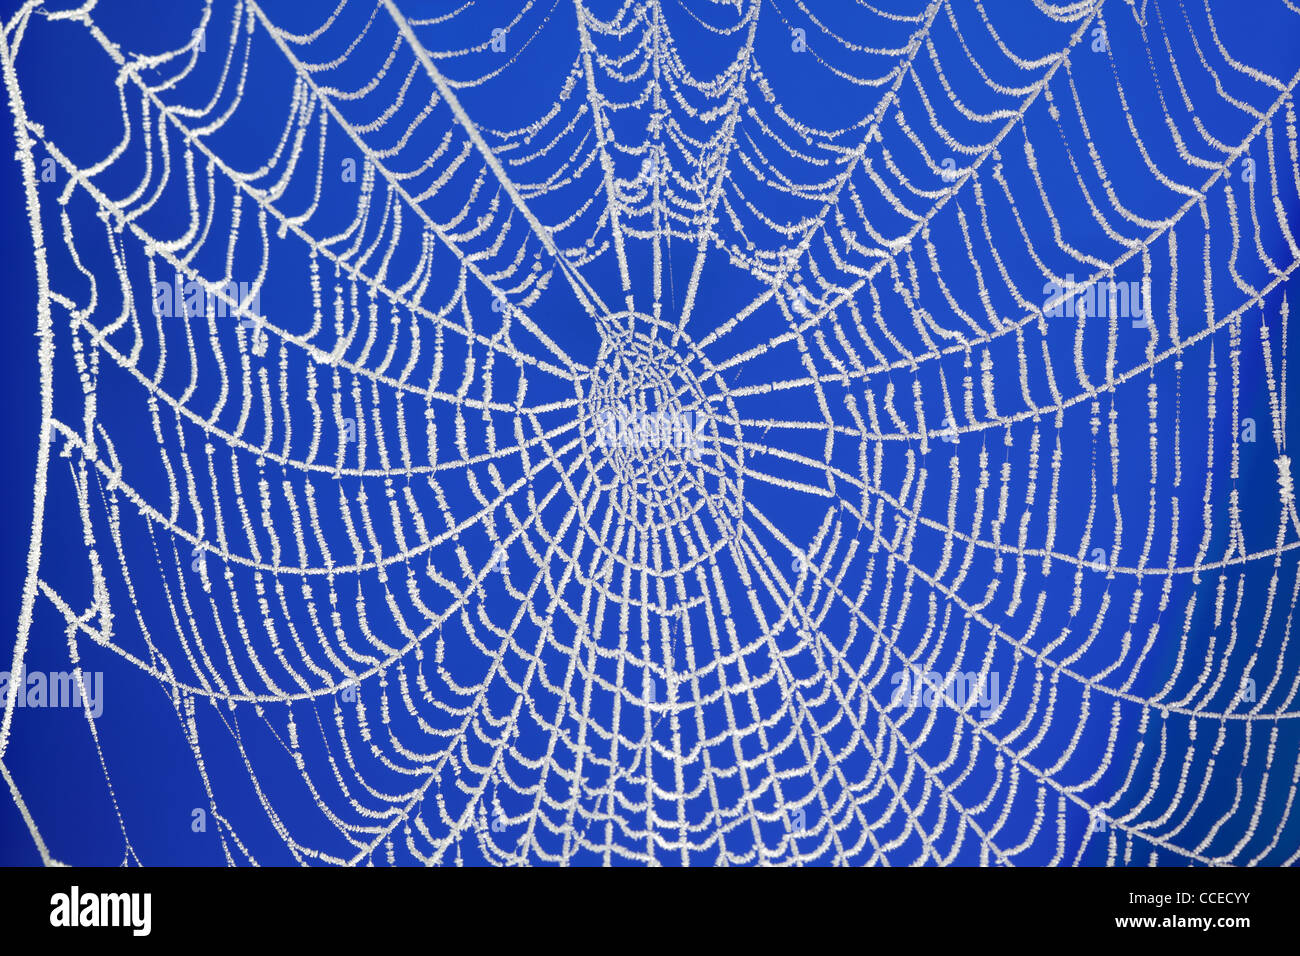 Gefrorene Spinnennetz Stockfoto